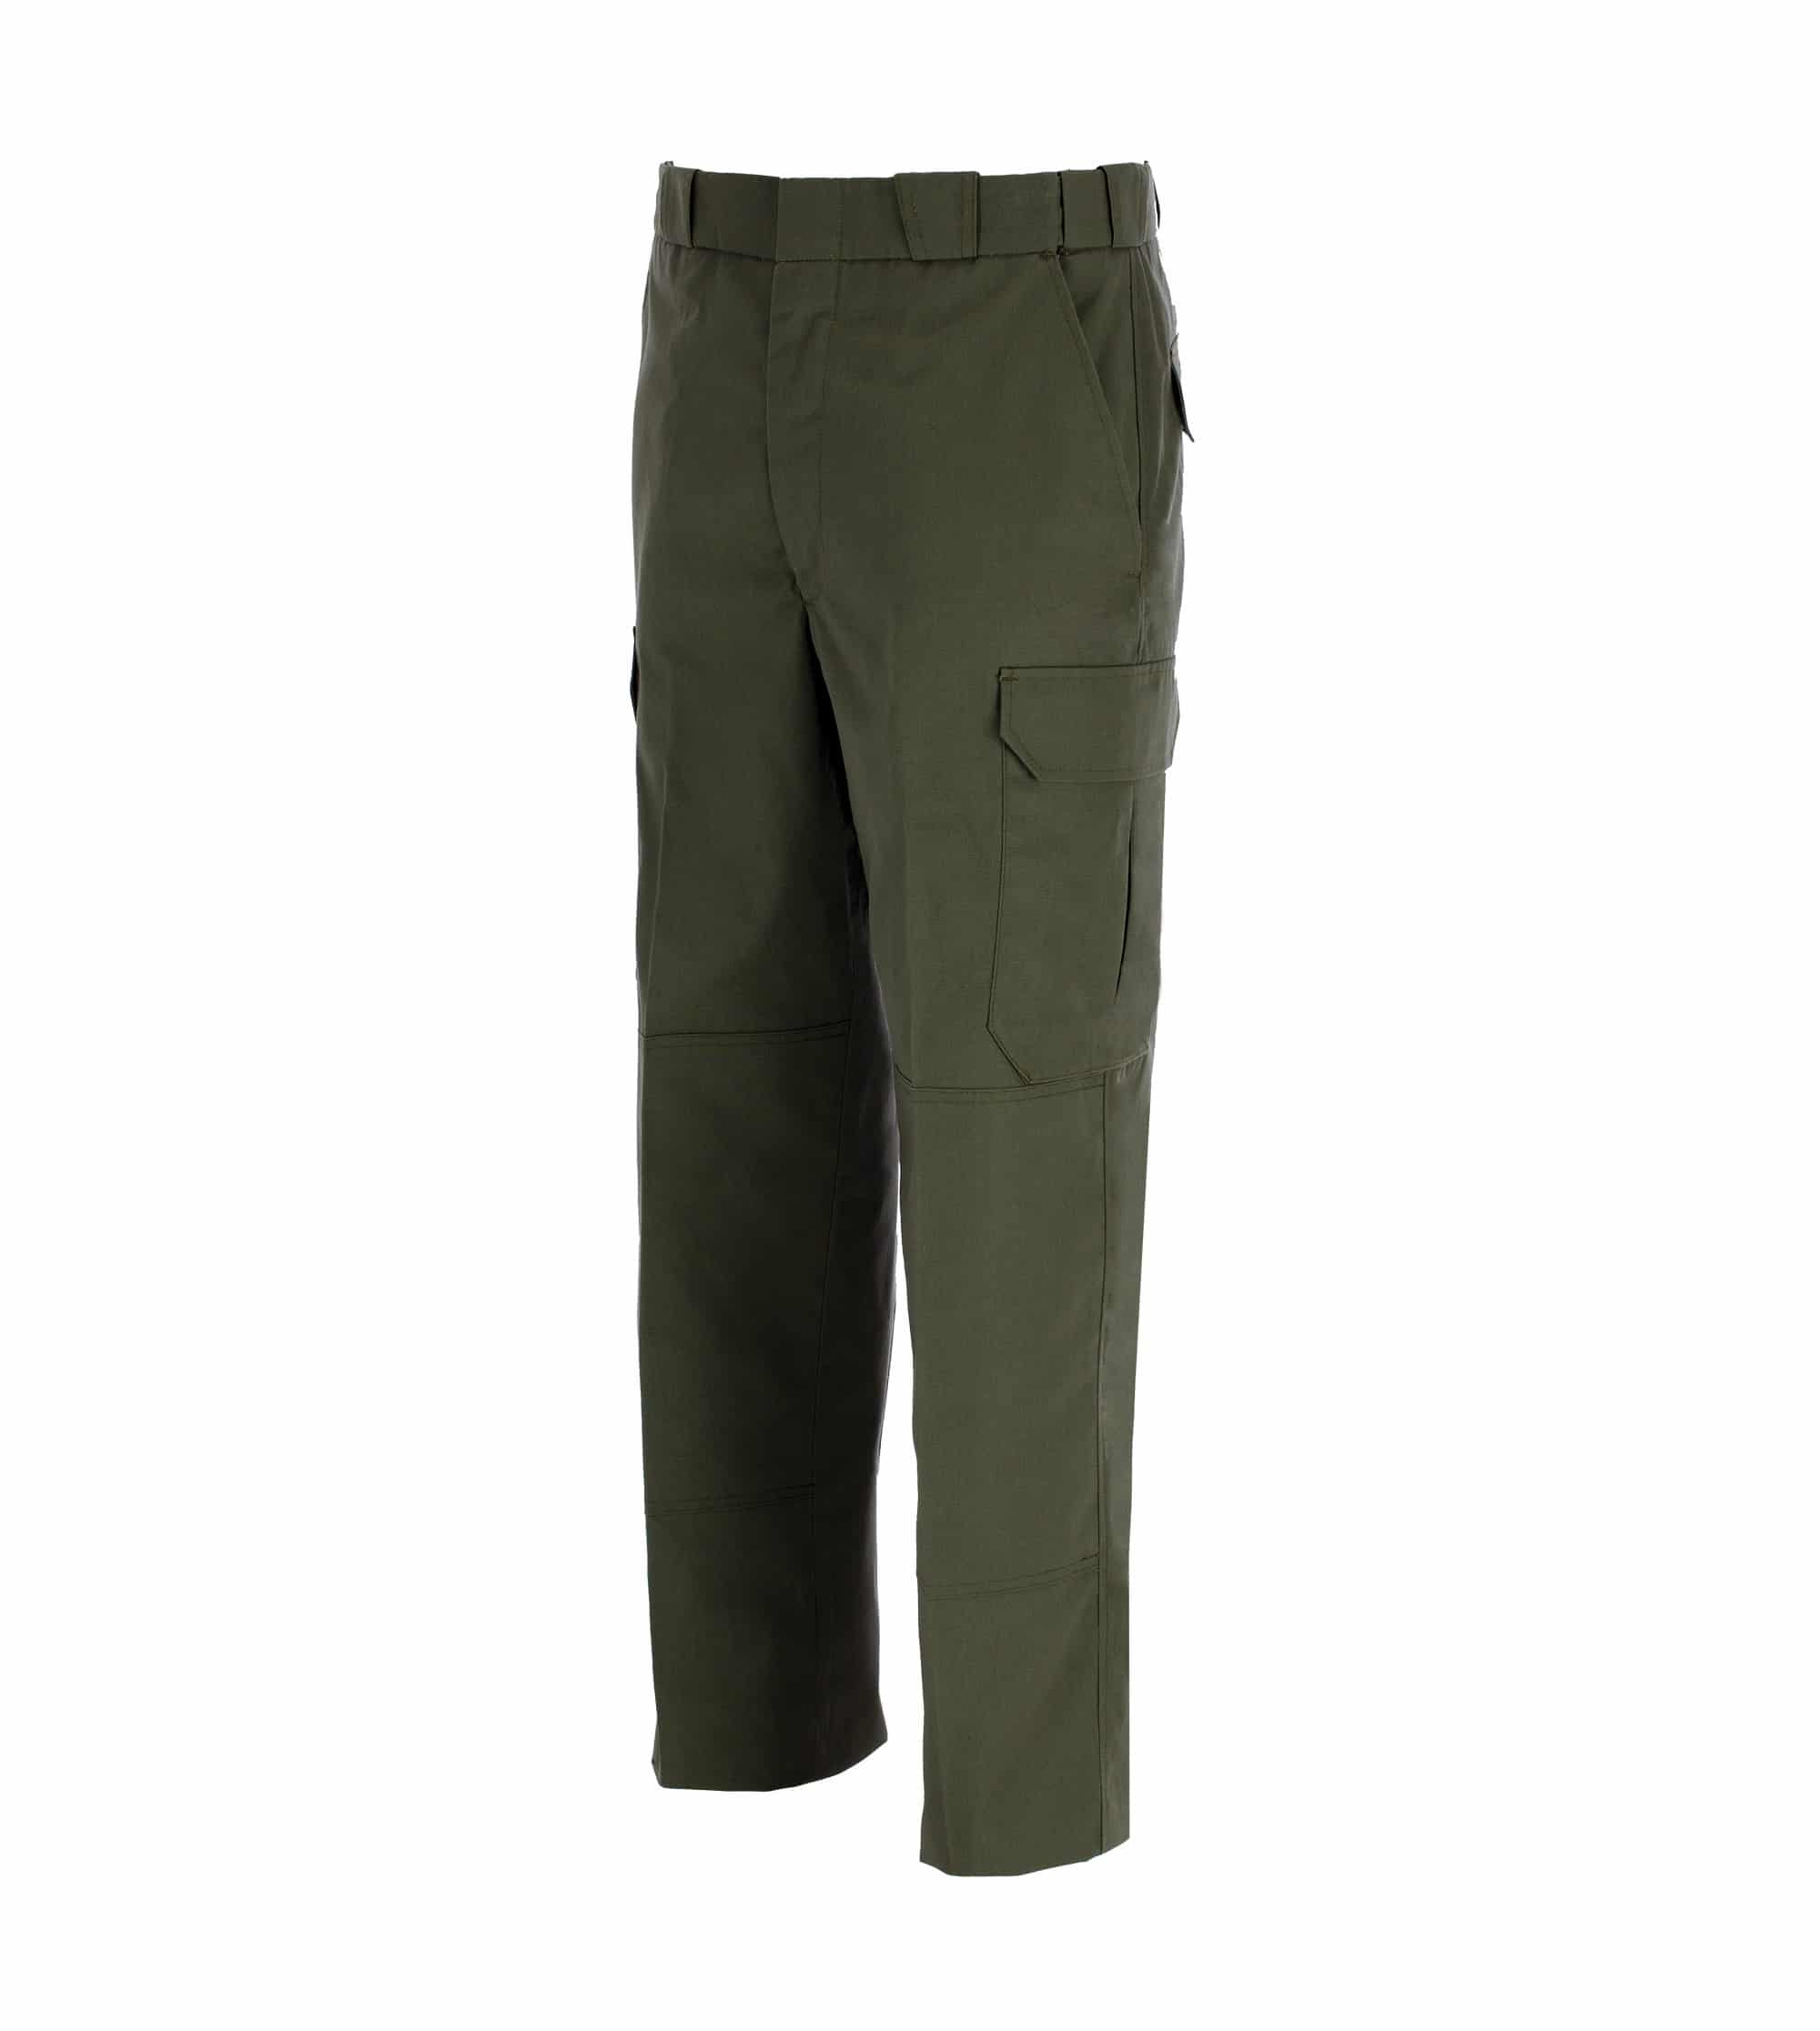 Cargo Tactical Trousers, Green Combat Pants, Multi-Pocket Working Pants  XS-XXL | eBay